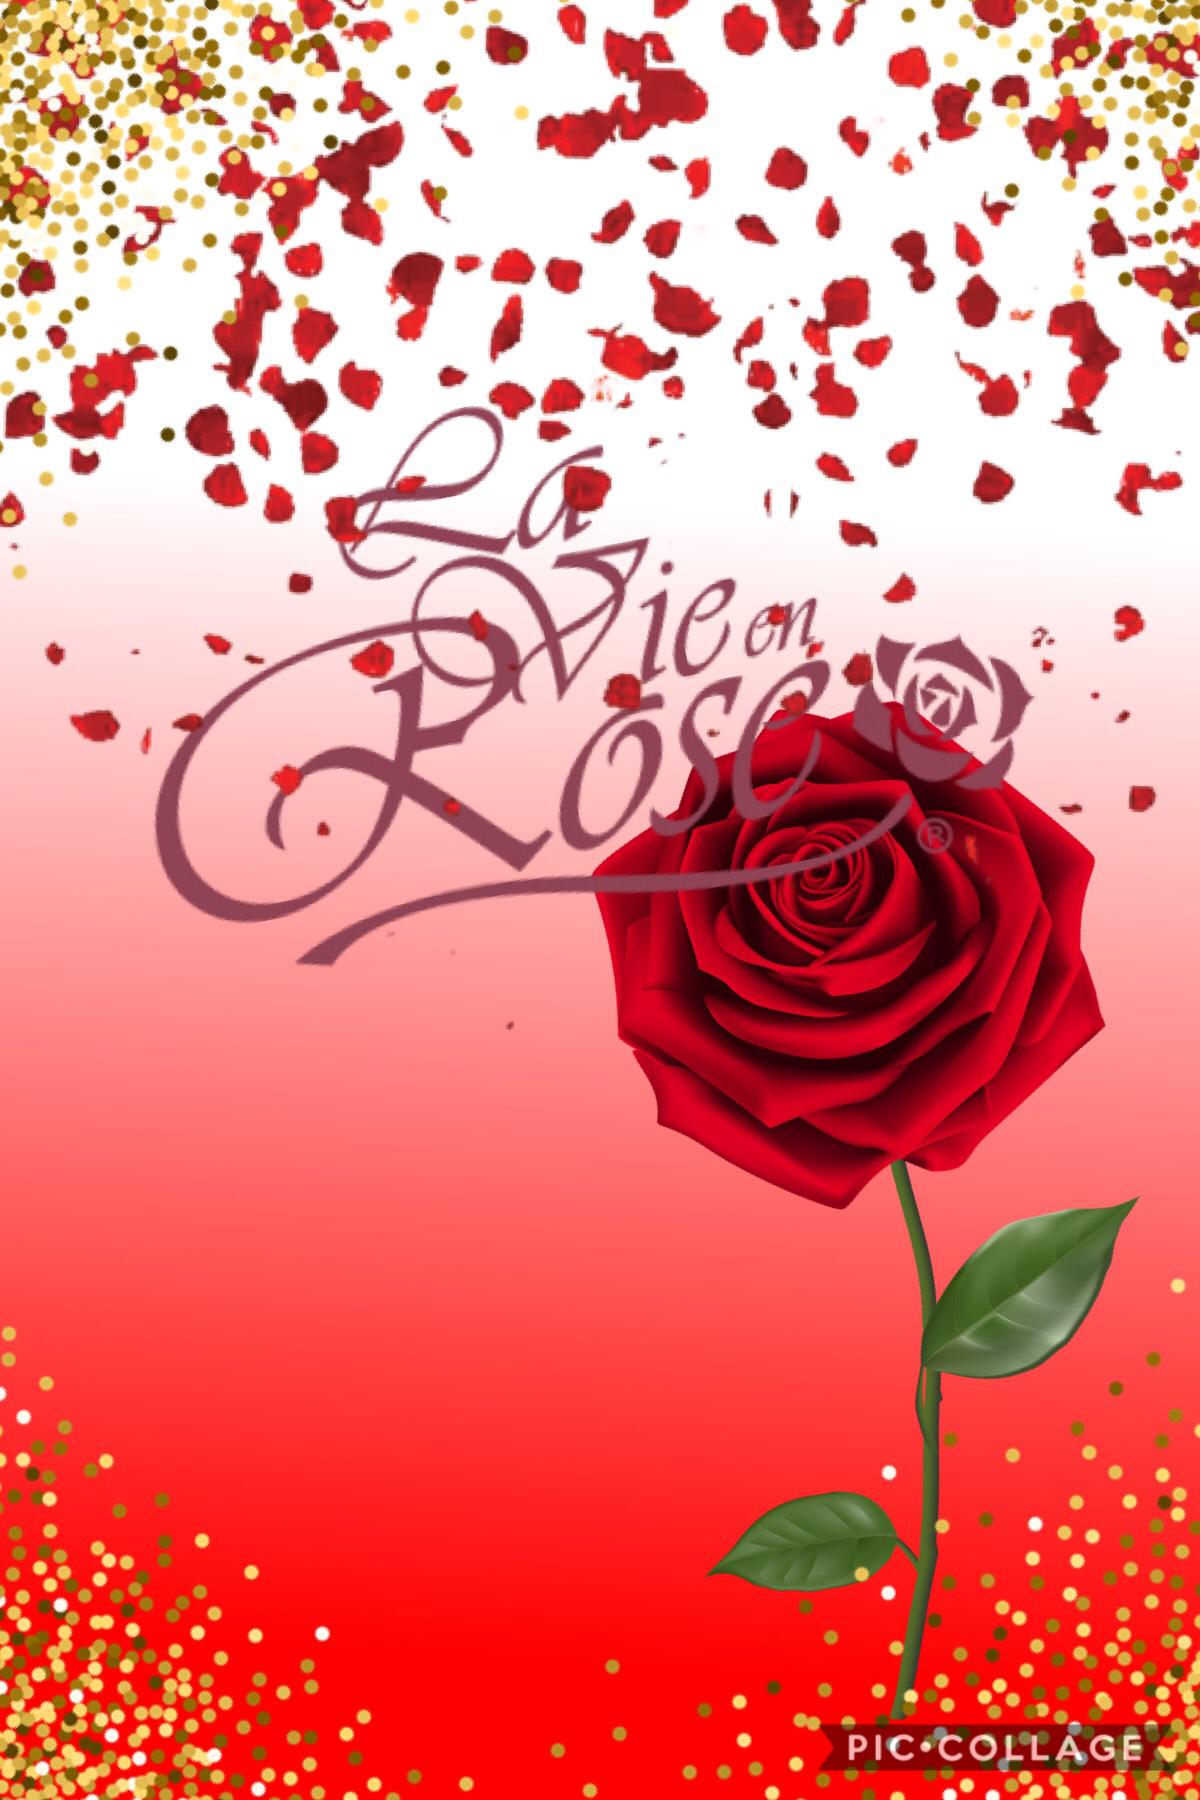 La Vie En Rose (click)
❤️❤️❤️❤️❤️
La Vie en Rose is a song by IZ*ONE!
❤️❤️❤️❤️❤️
Like,comment,share and follow me!!!!
❤️❤️❤️❤️❤️